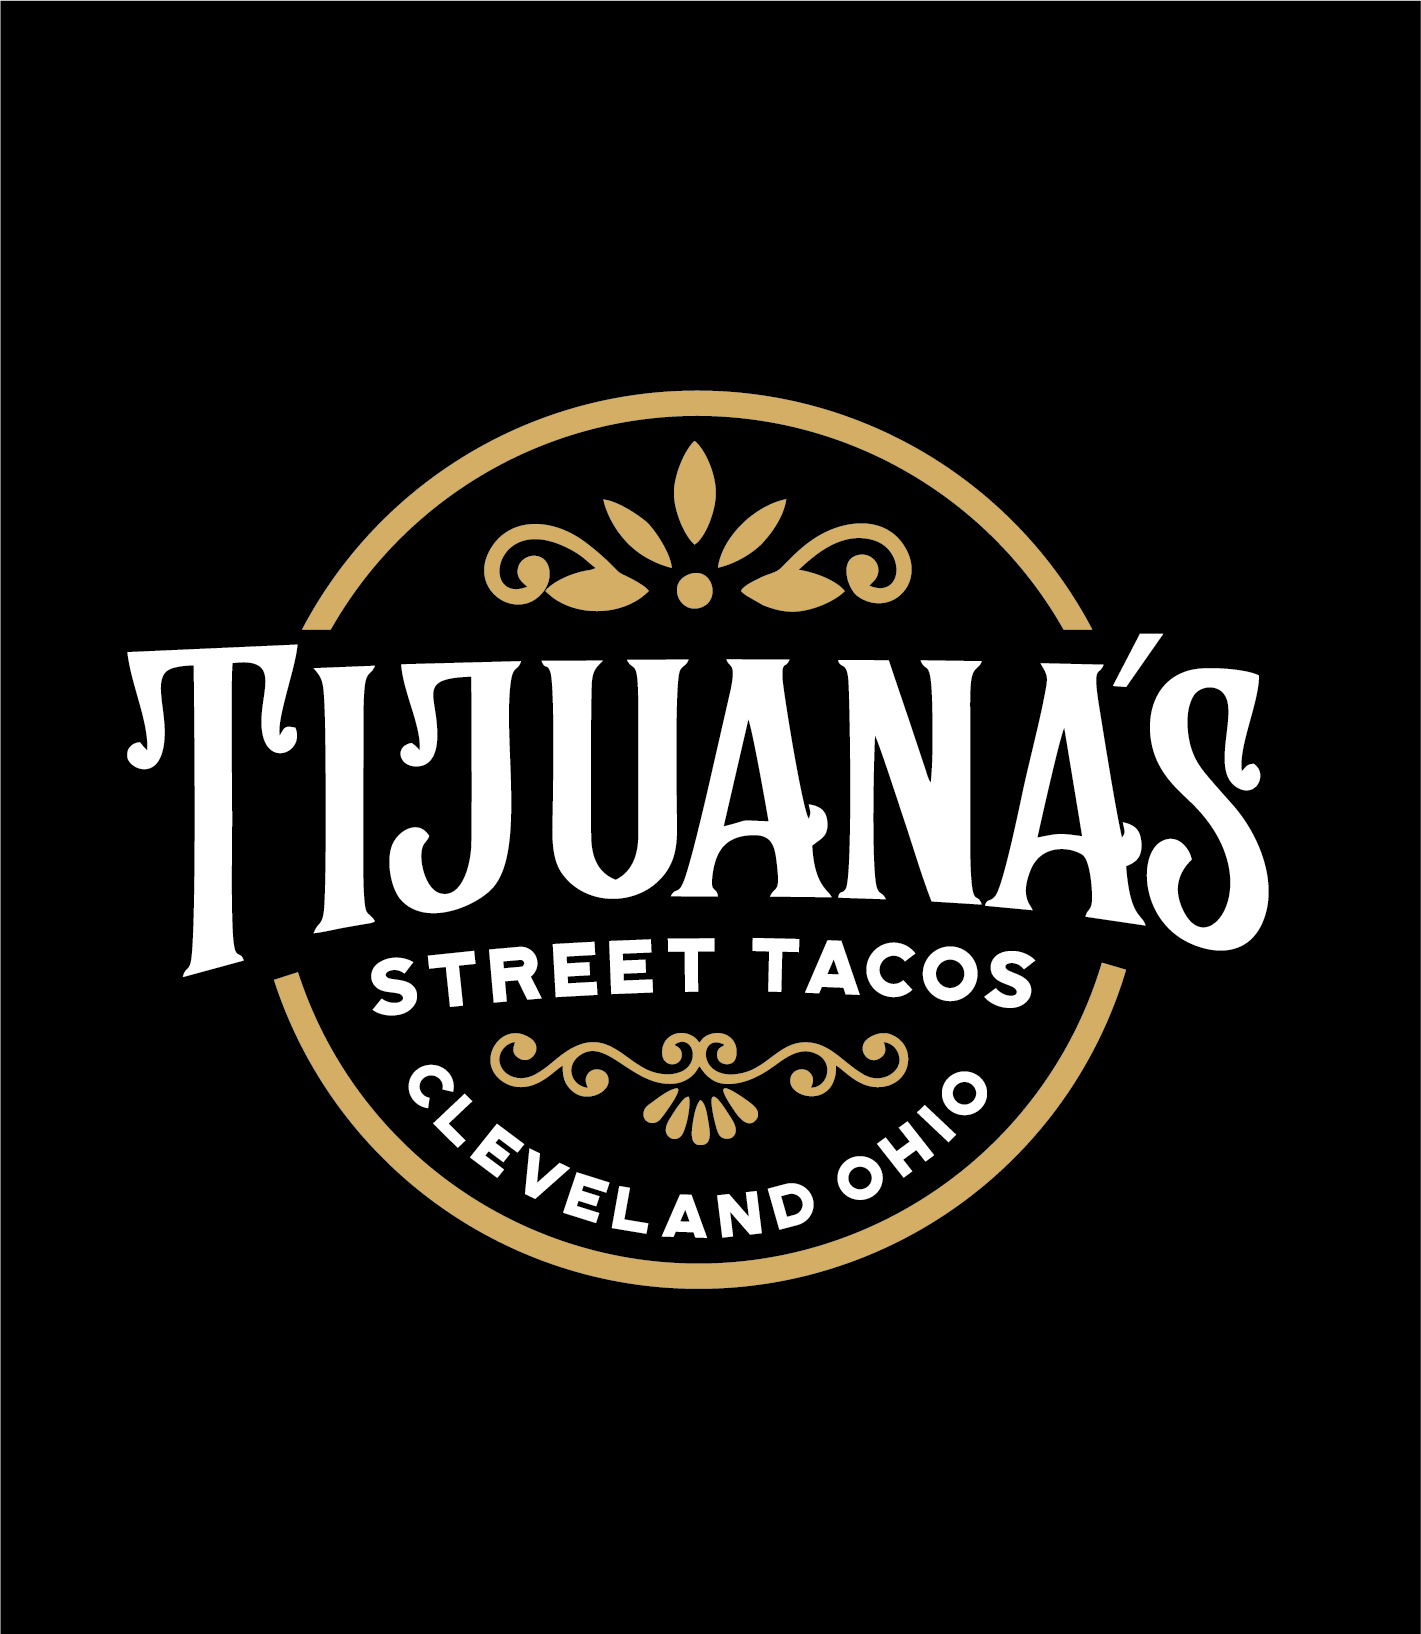 Tijuana's Street Tacos